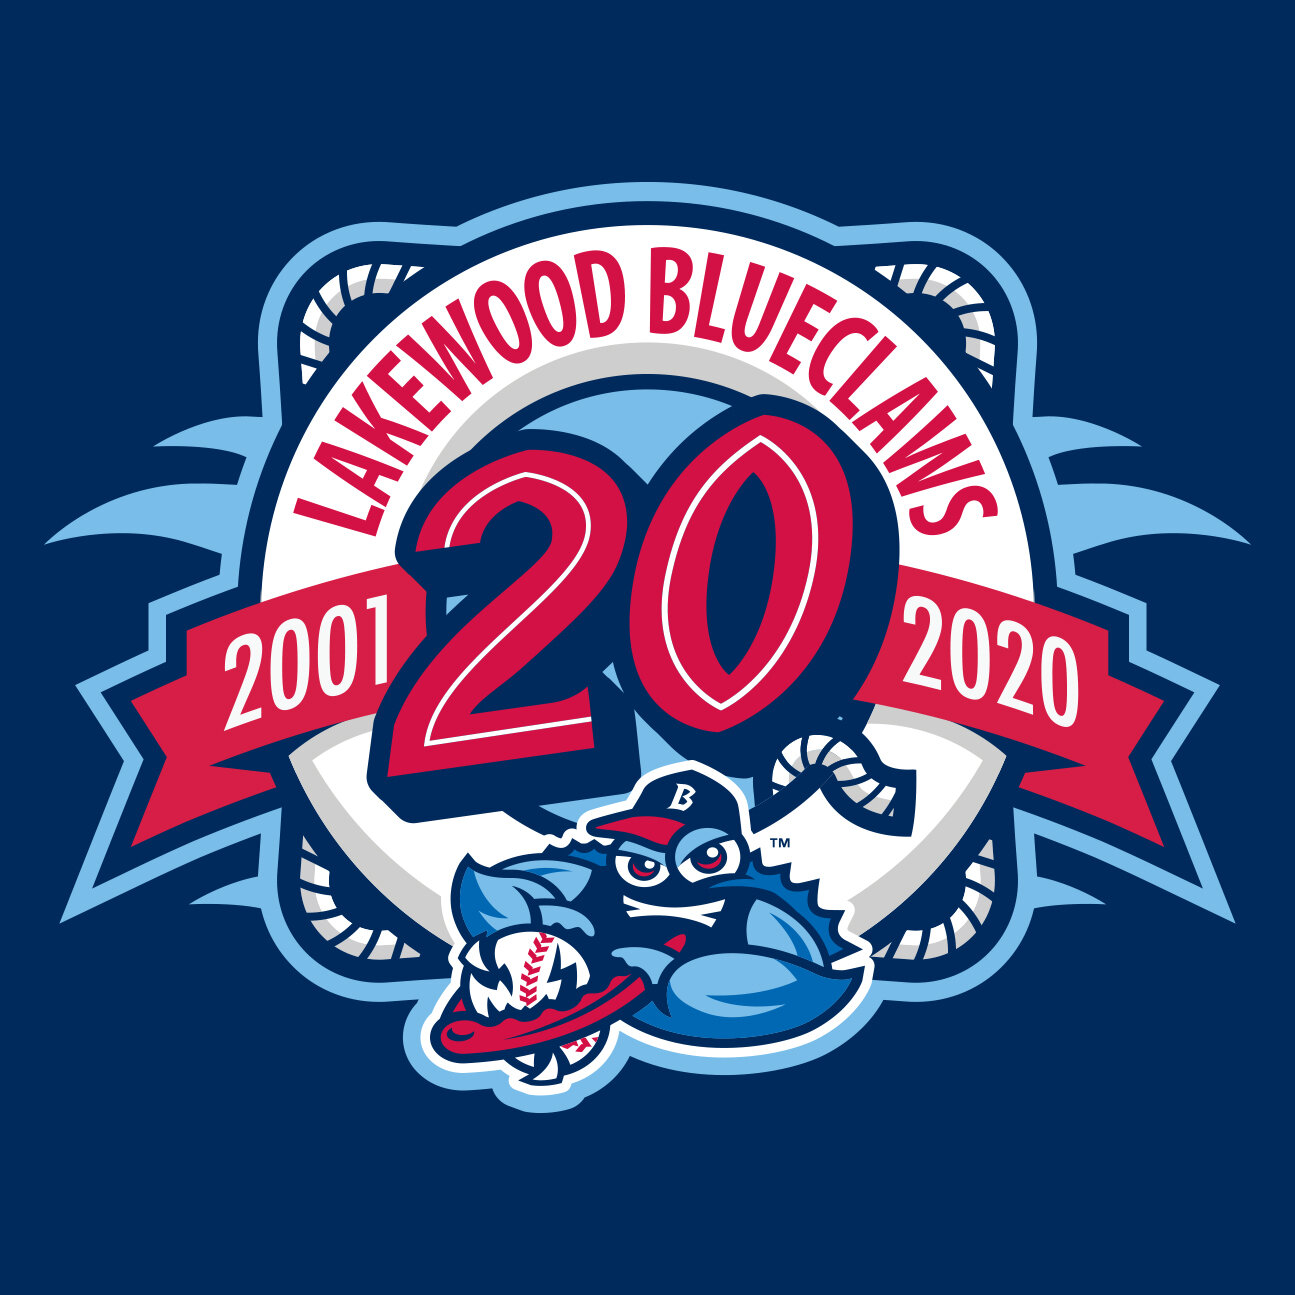 Lakewood BlueClaws anniversary identity